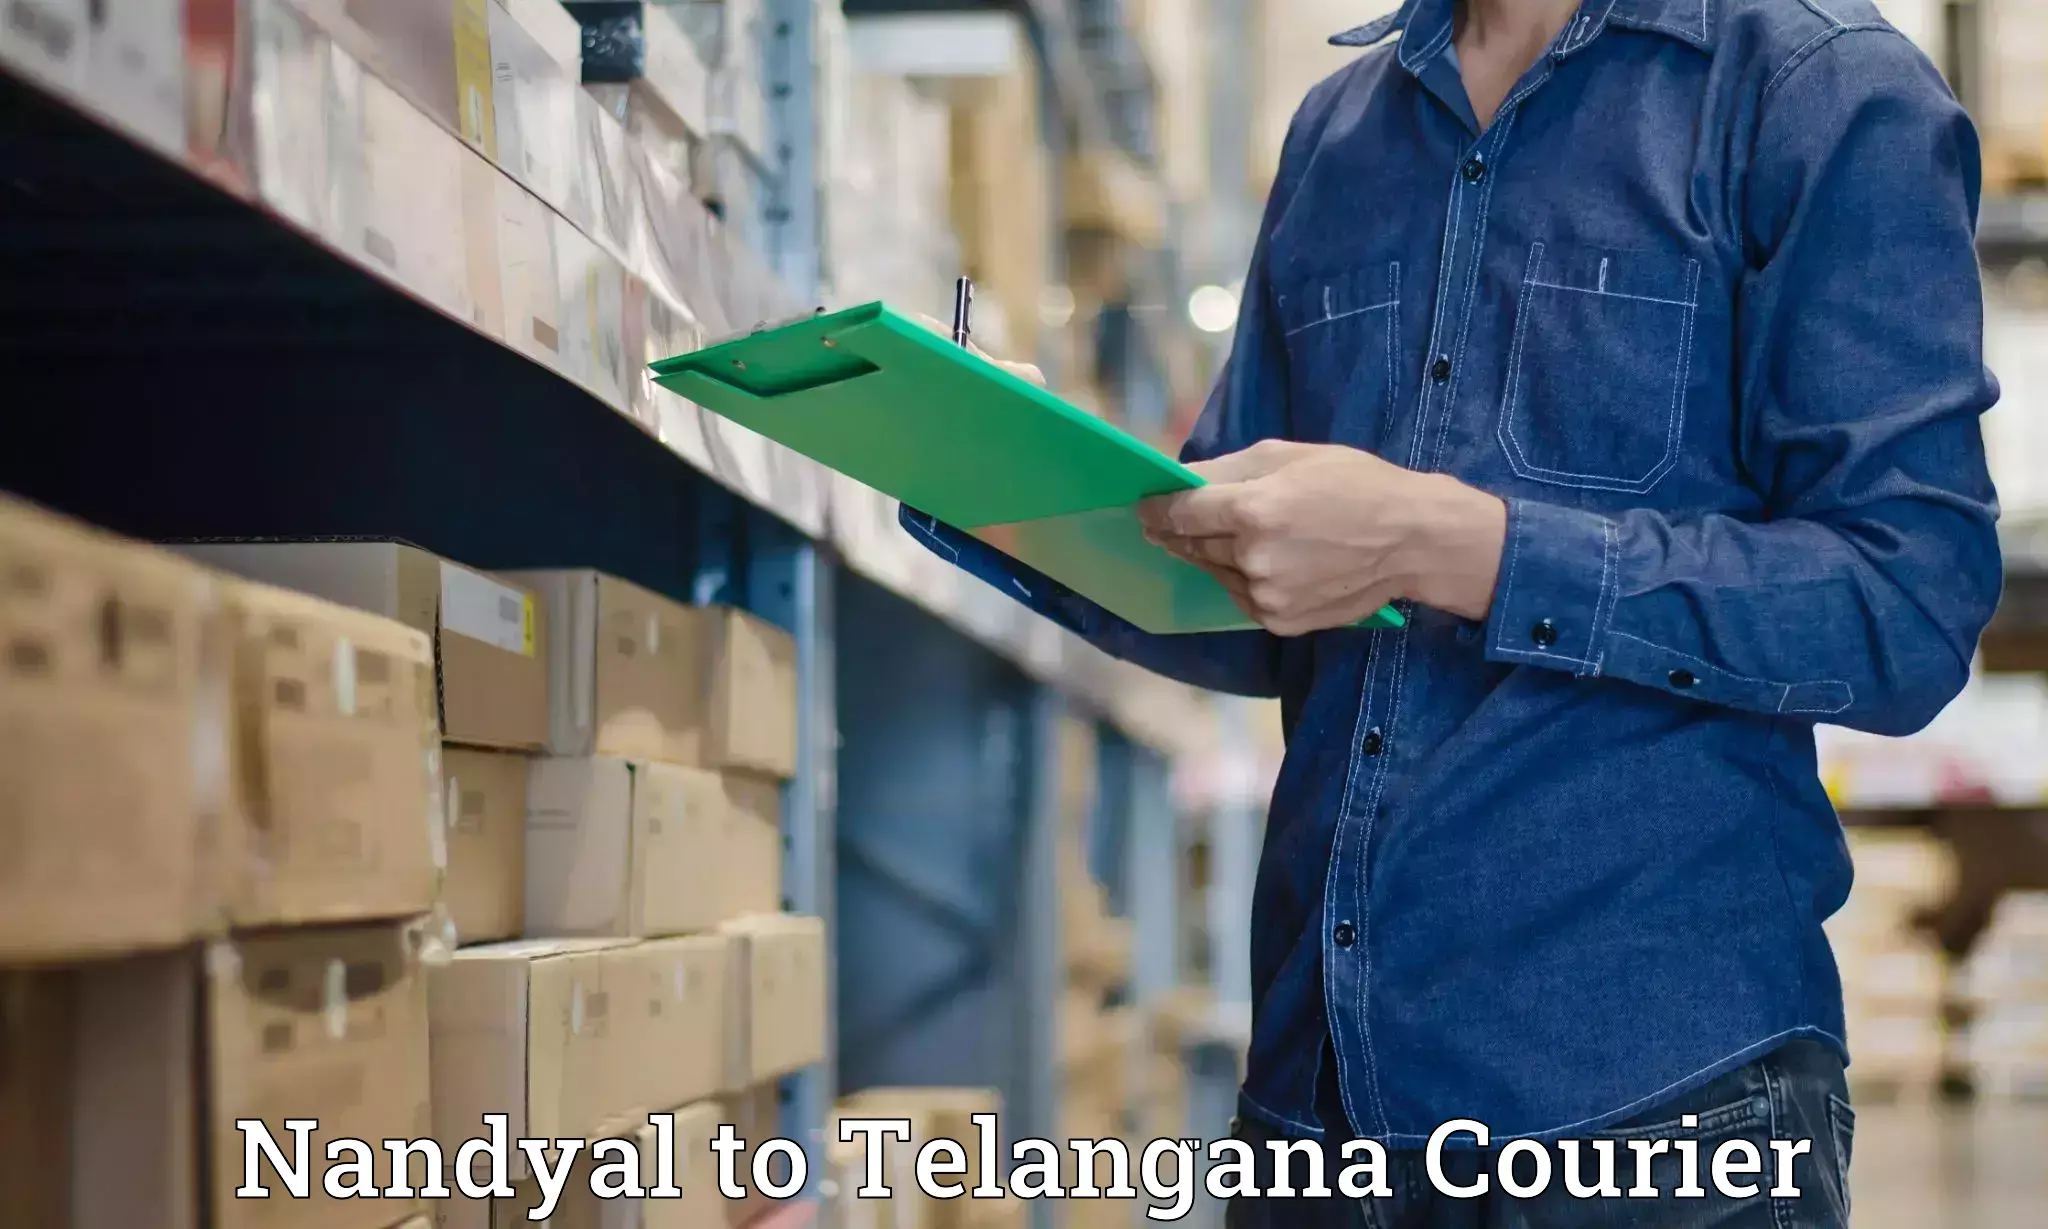 Urban courier service Nandyal to Telangana